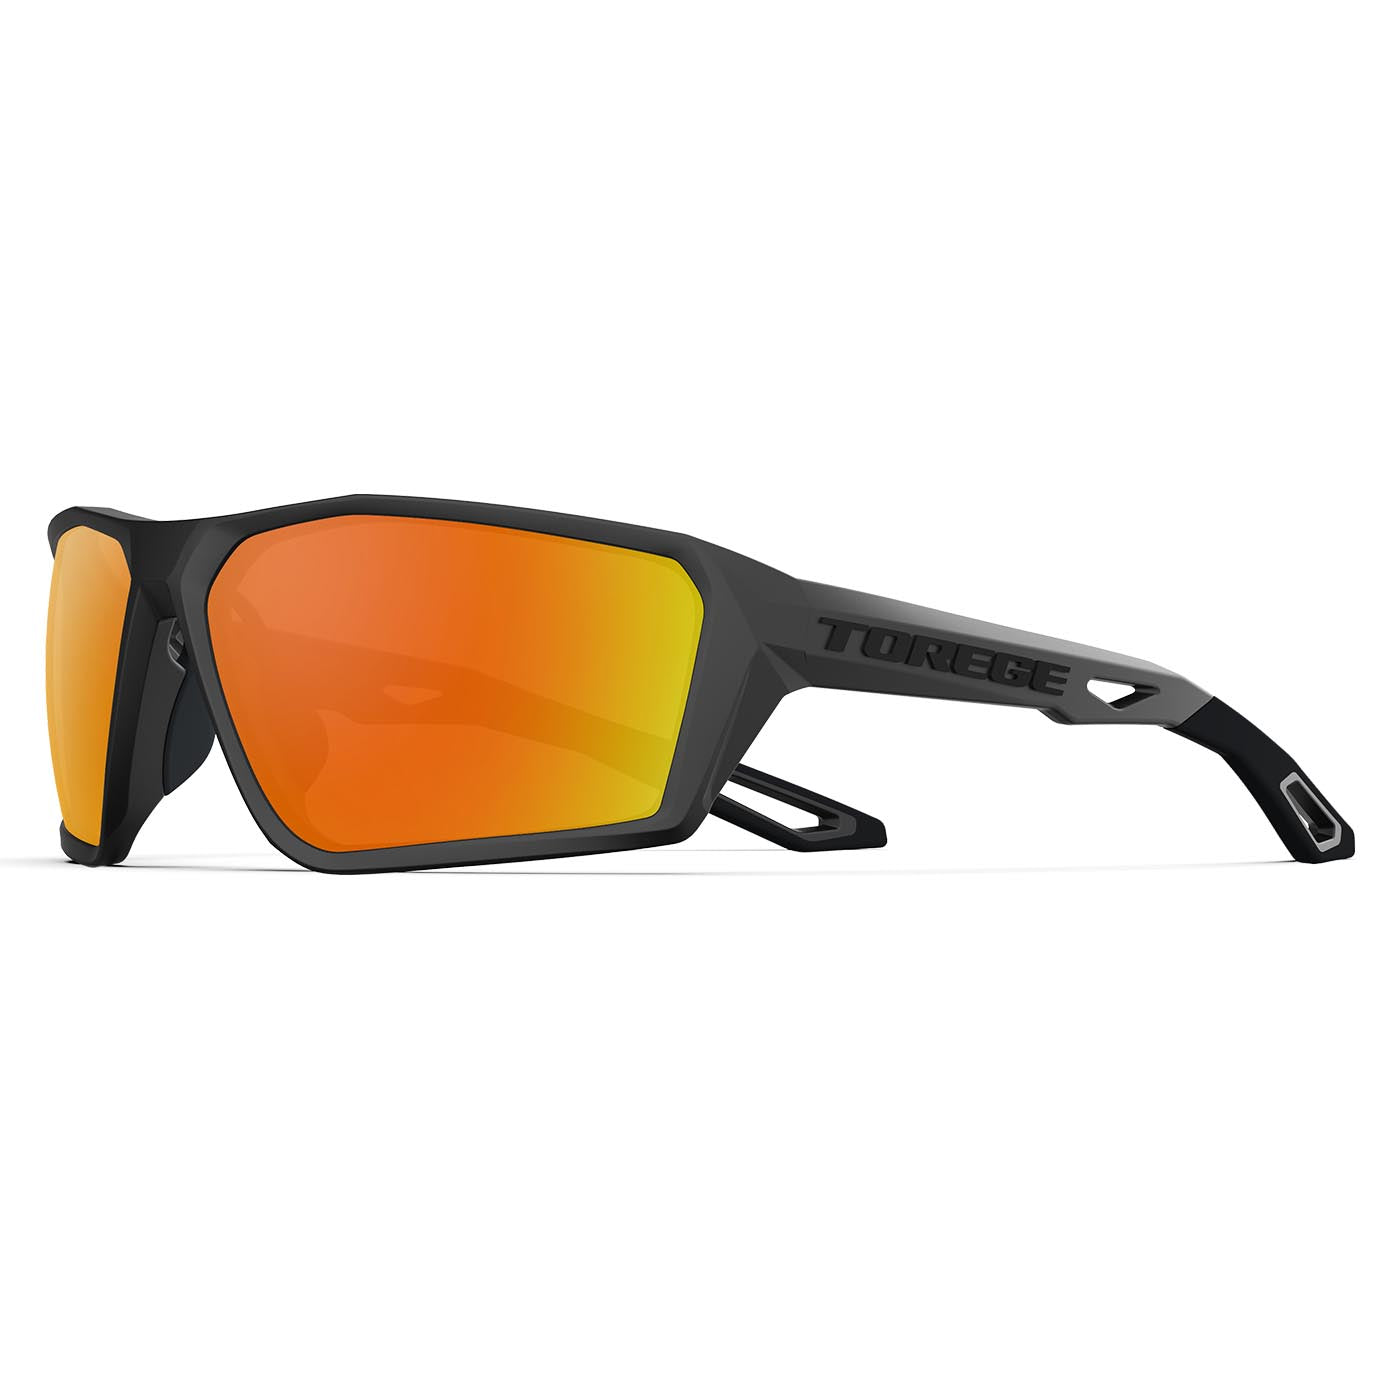 Torege® Official Store: Sunglasses, Goggles & Accessories | Torege® US